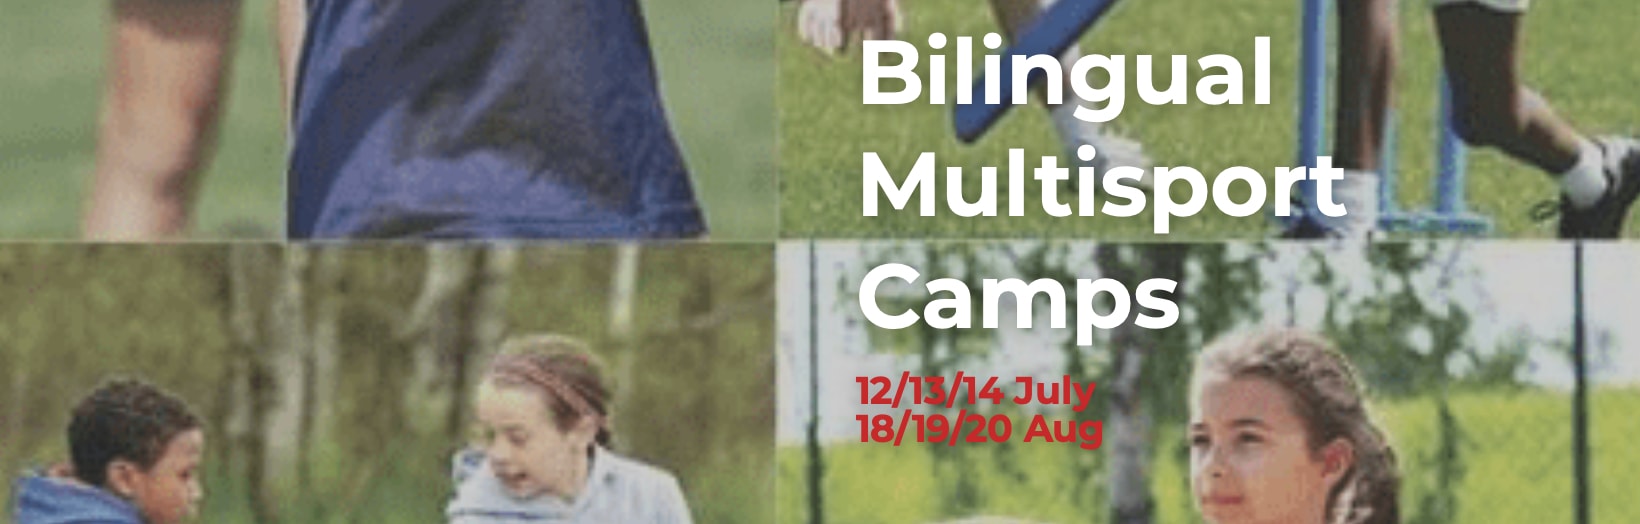 Bilingual Multisport Camps